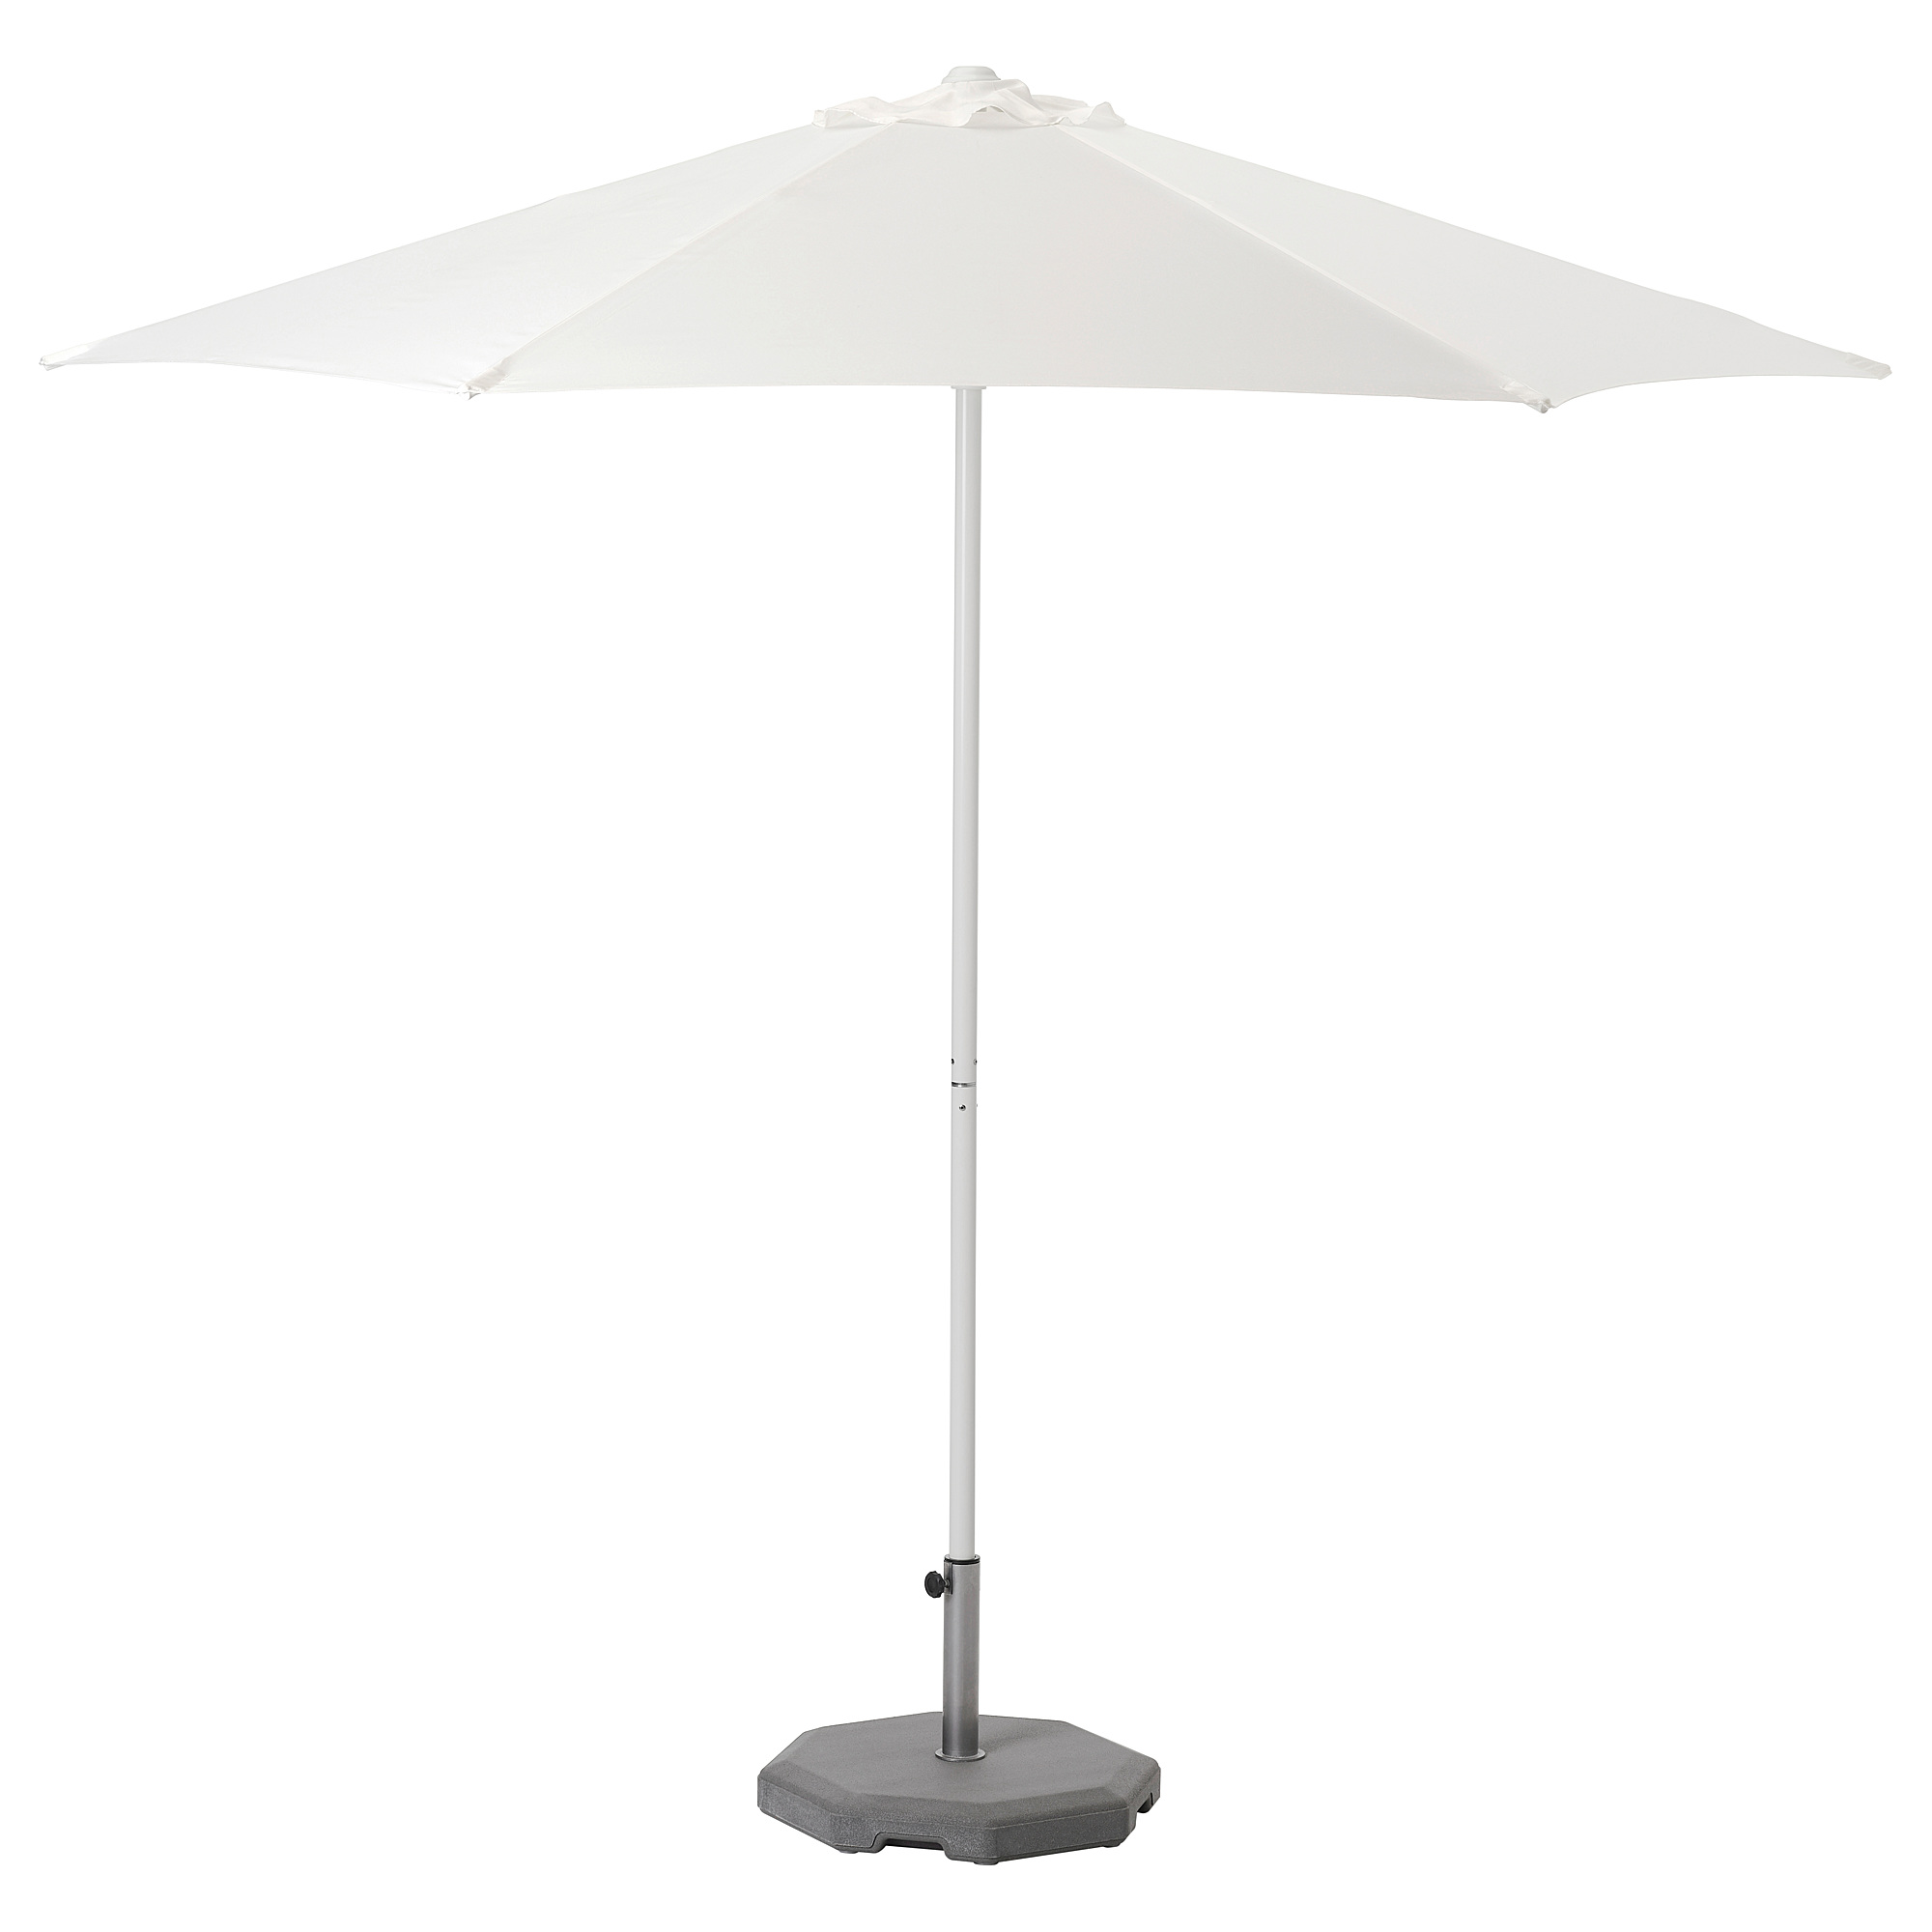 HÖGÖN umbrella with base